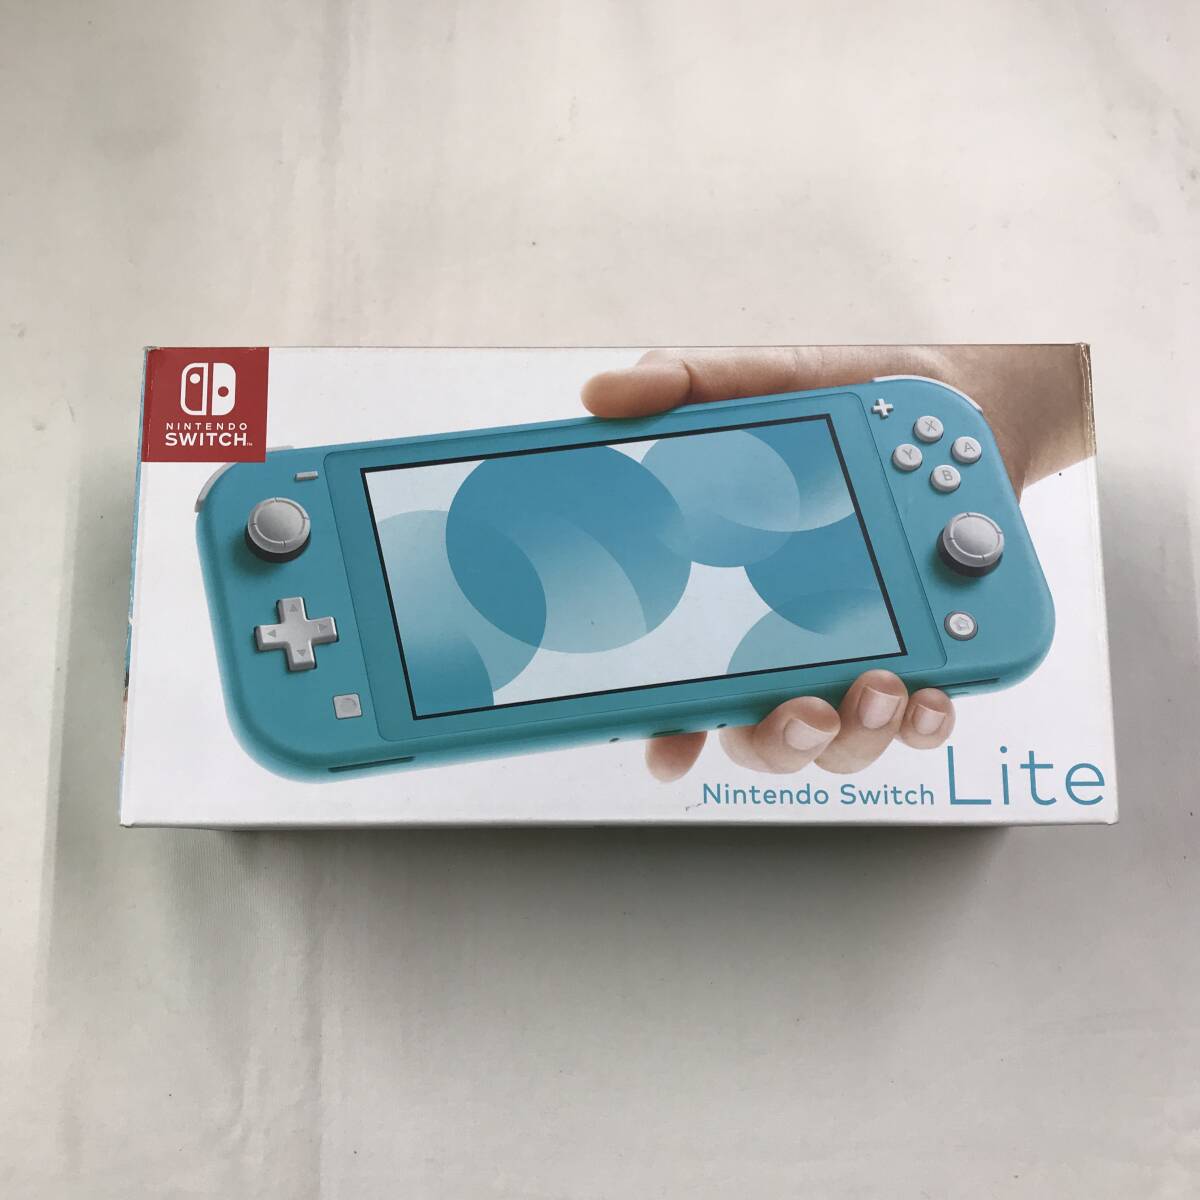 gb2466 free shipping! operation goods Nintendo nintendo Nintendo Switch Lite body only switch light turquoise 